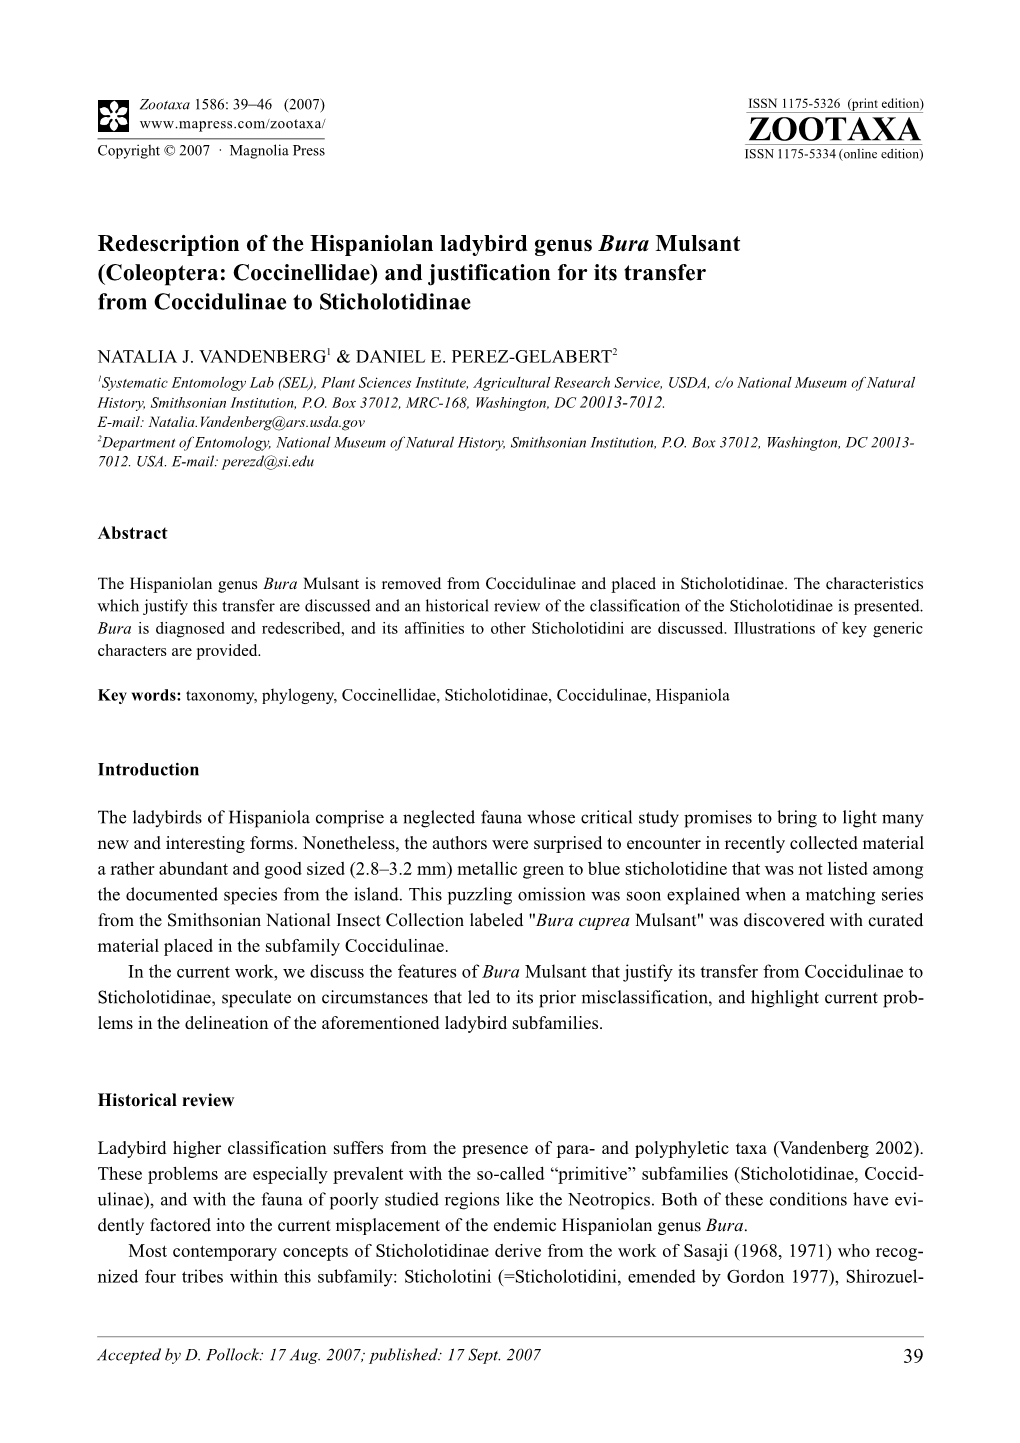 Zootaxa,Redescription of the Hispaniolan Ladybird Genus Bura